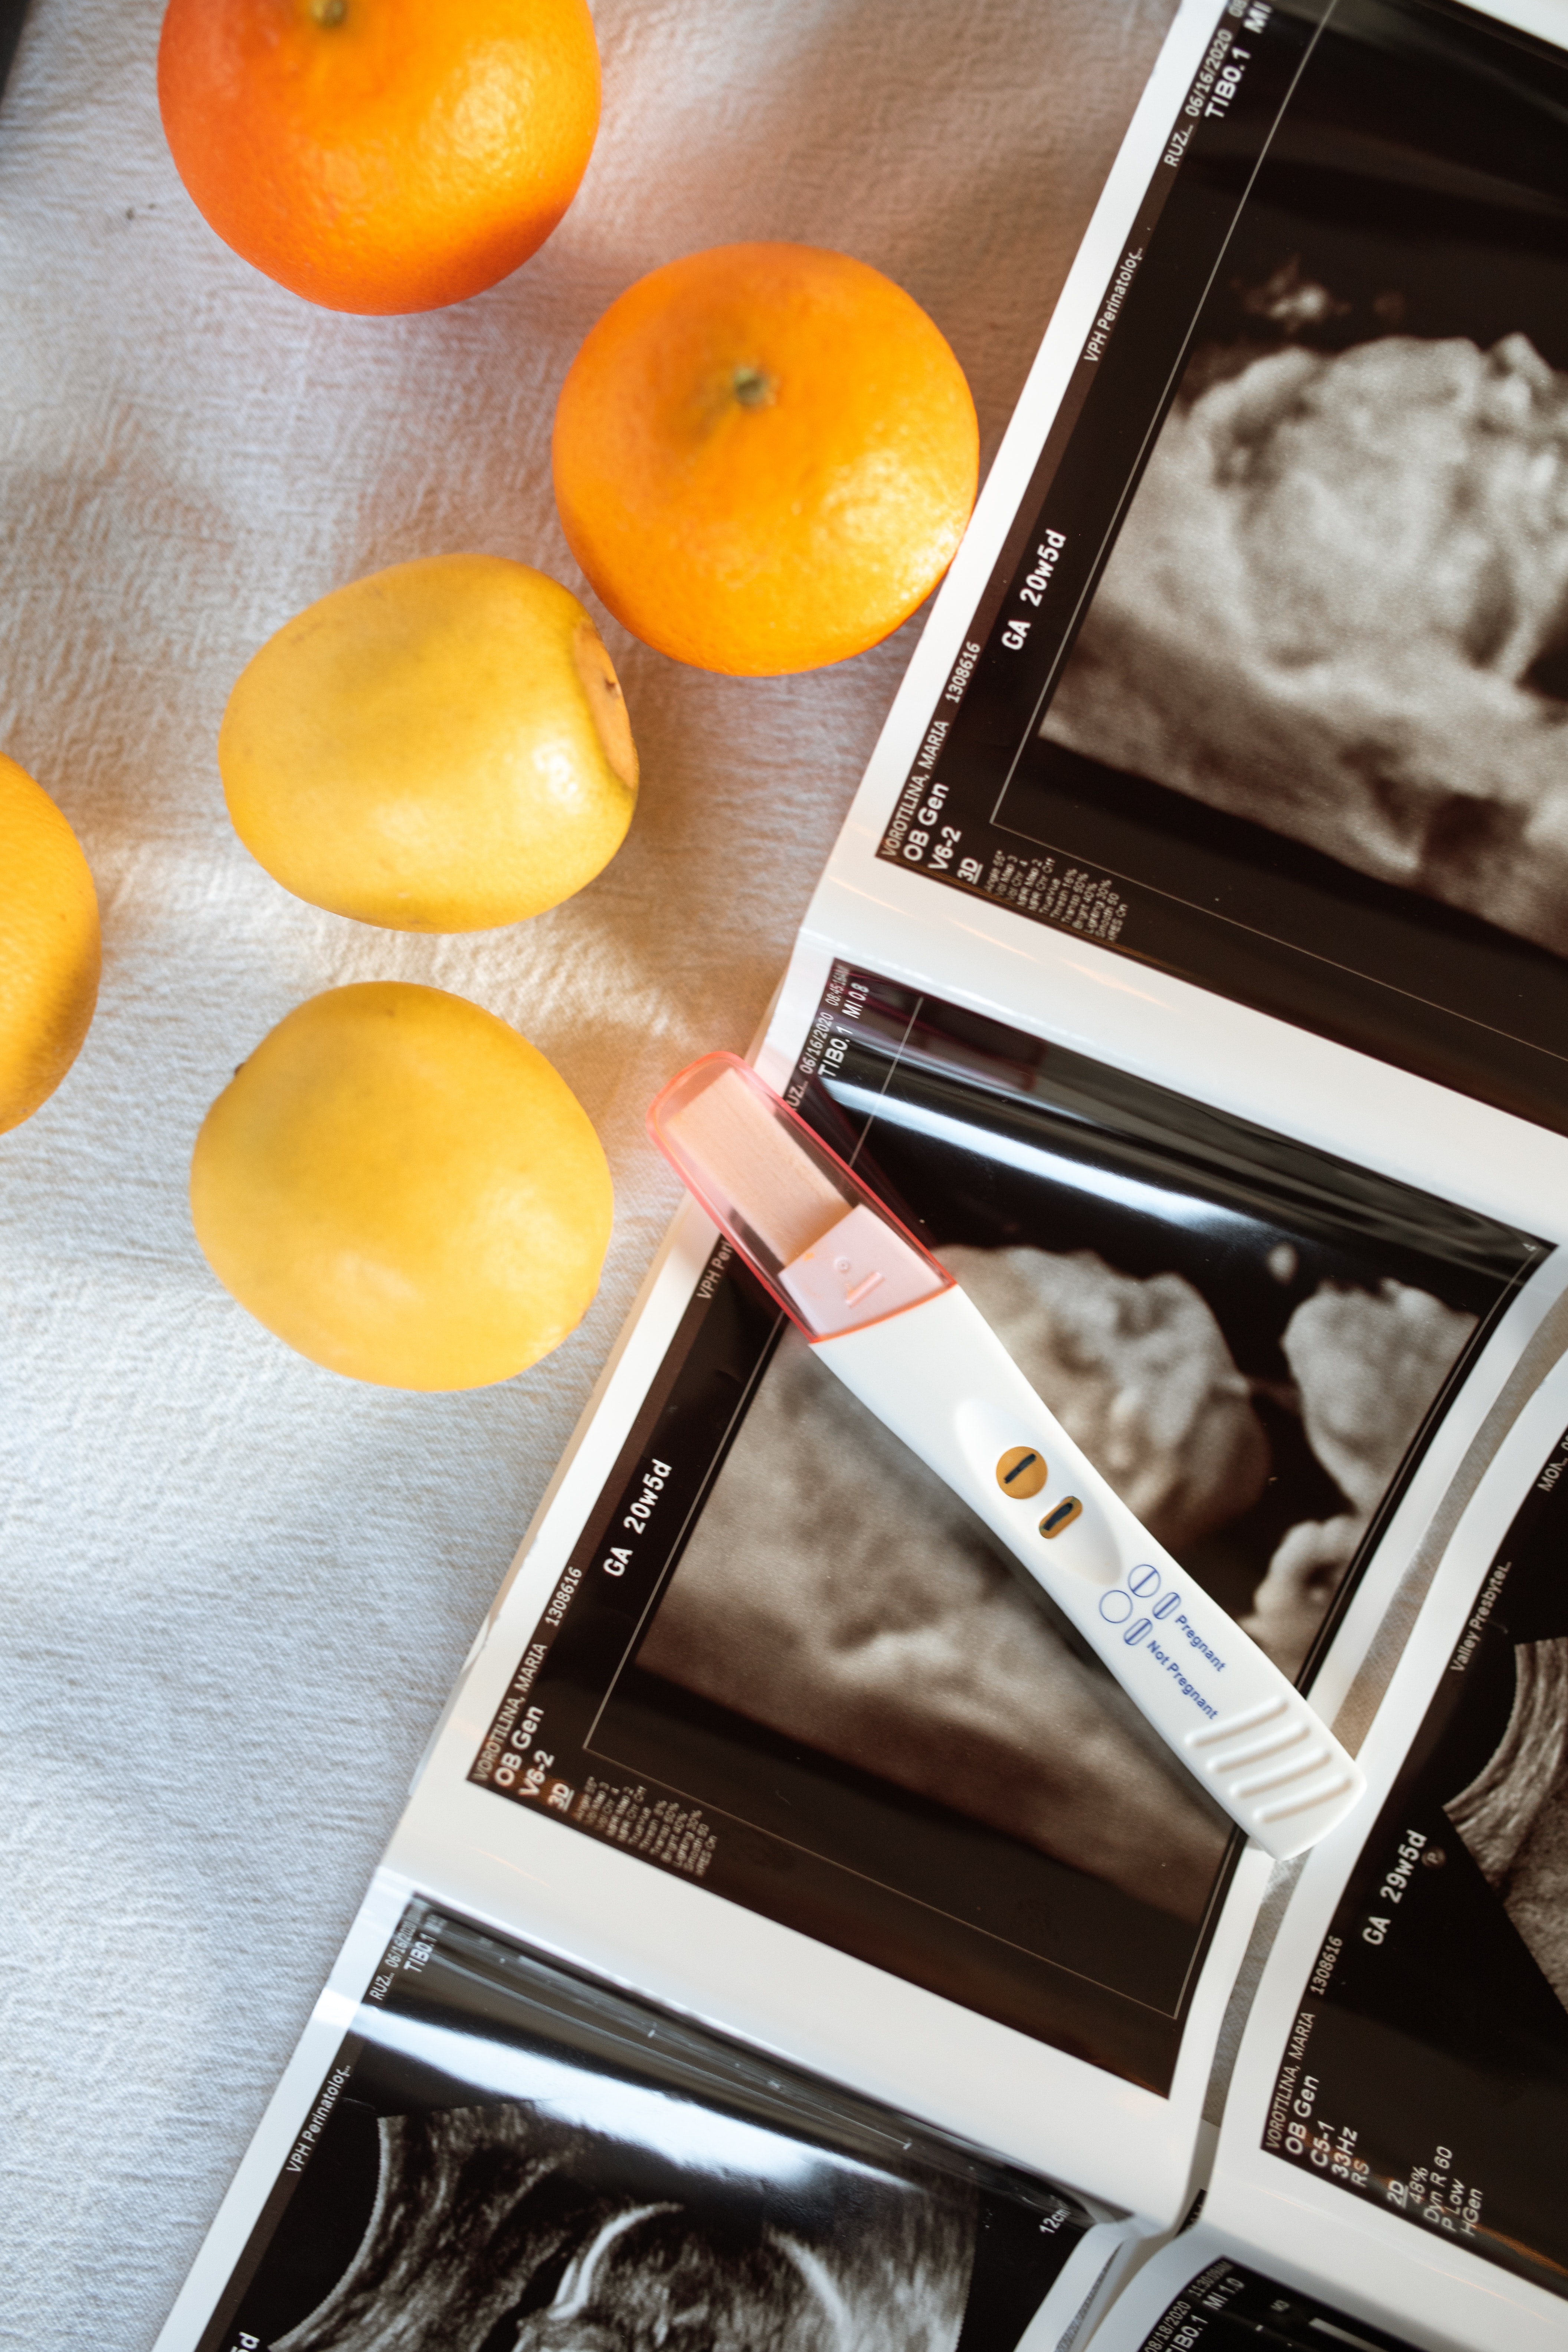 Ultrasound image and pregnancy test kit | Source: Pexels